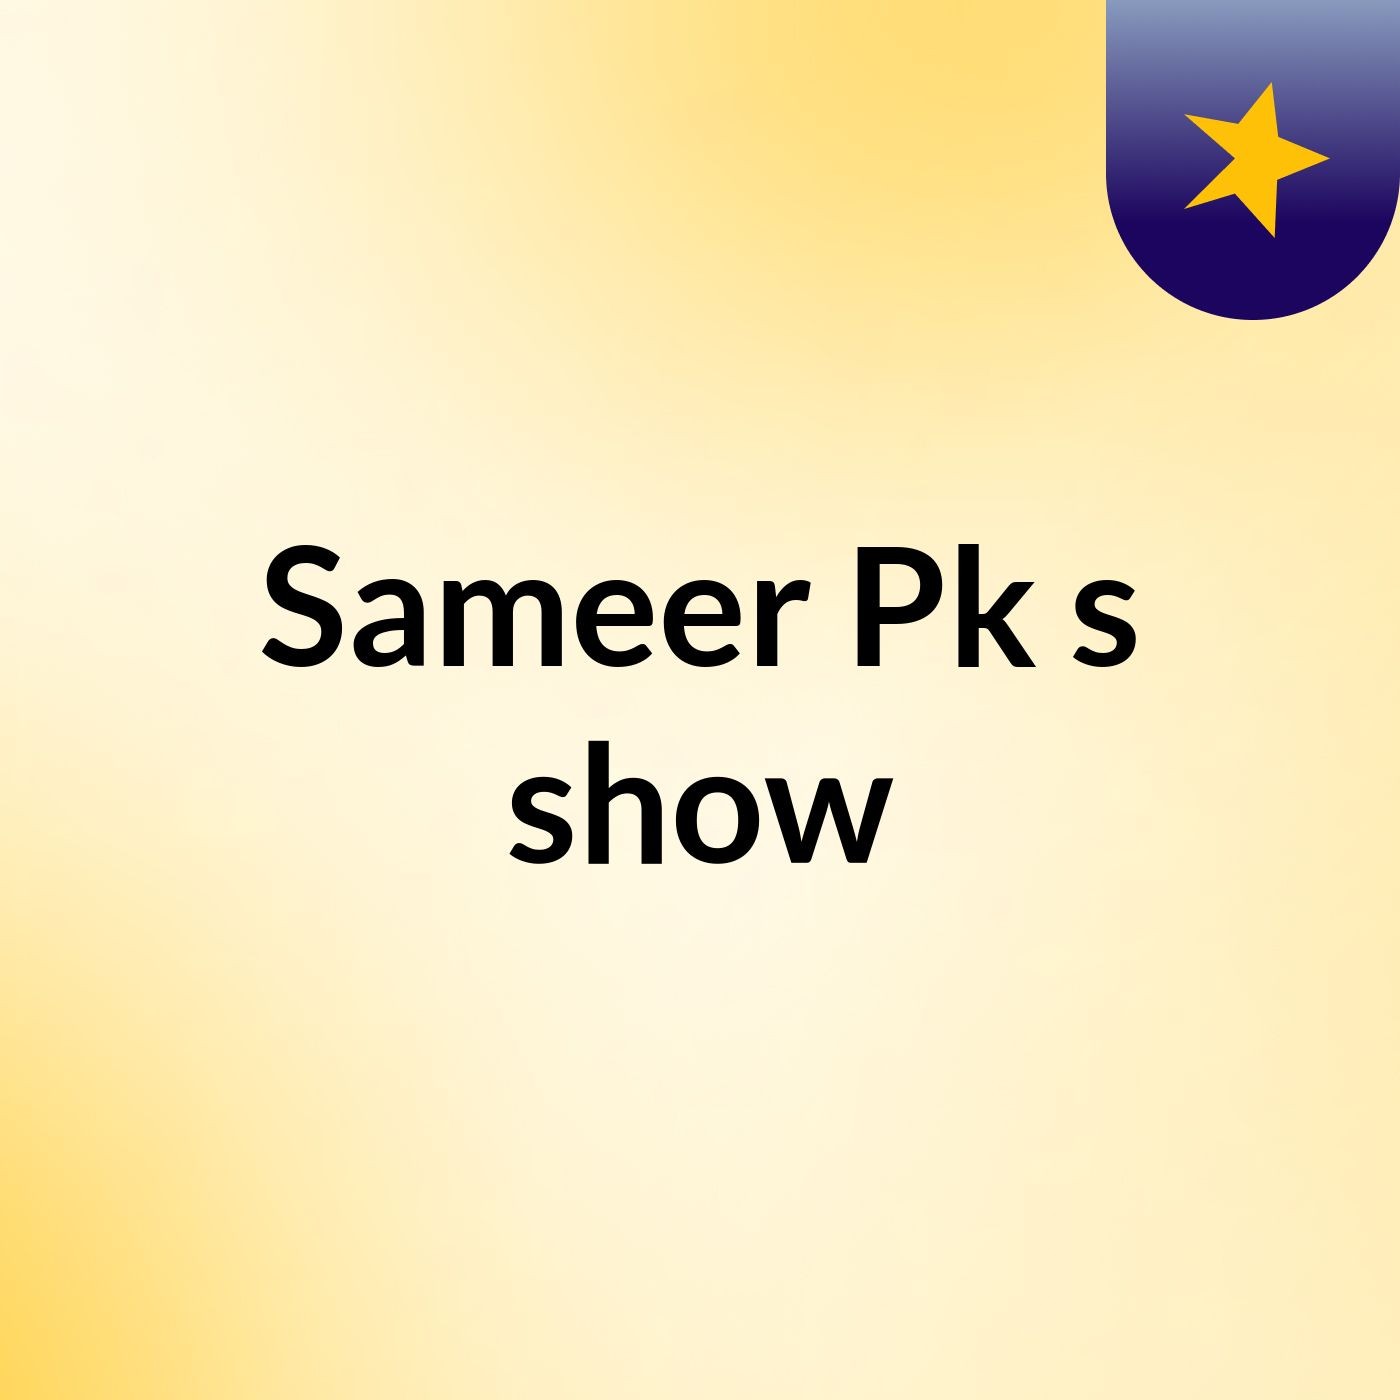 Sameer Pk's show